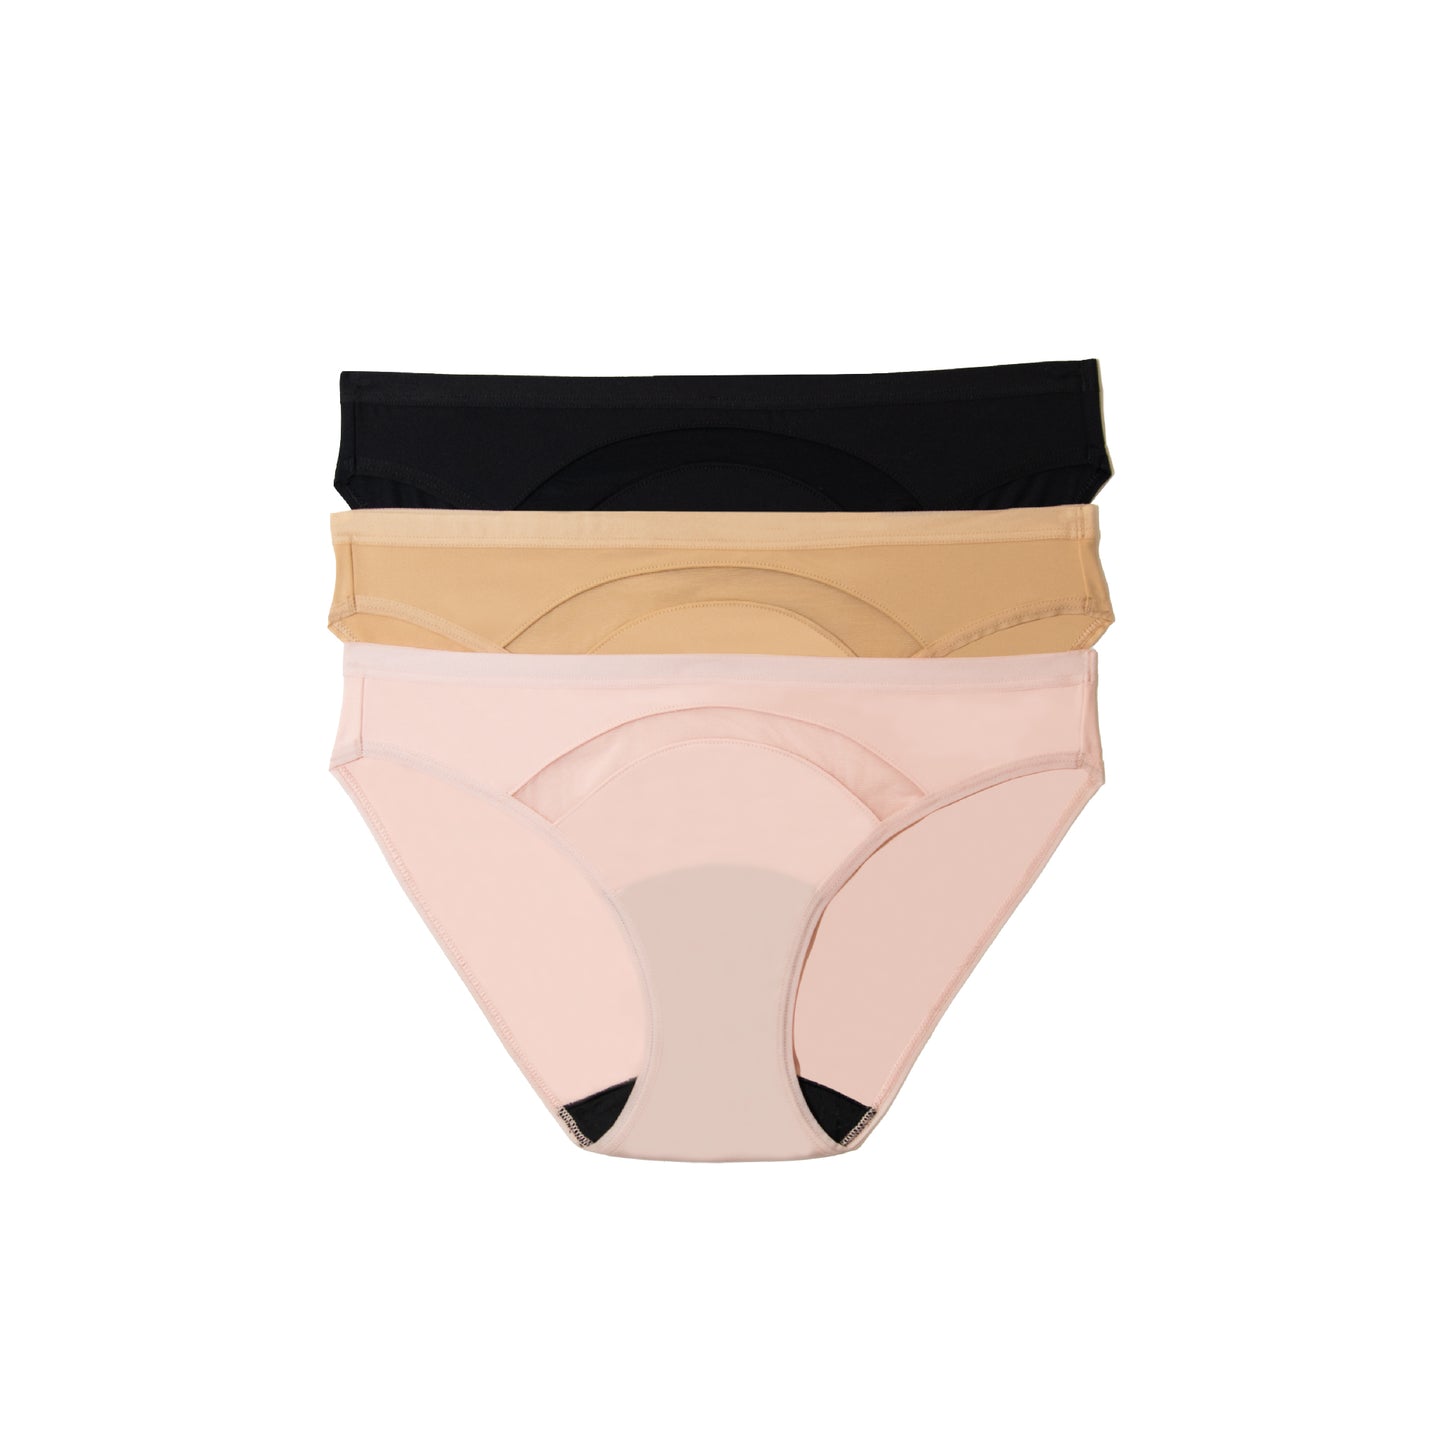 Period and Incontinence Underwear - My Humble Earth Low Rise Bikini 2 – Eco  Ladies